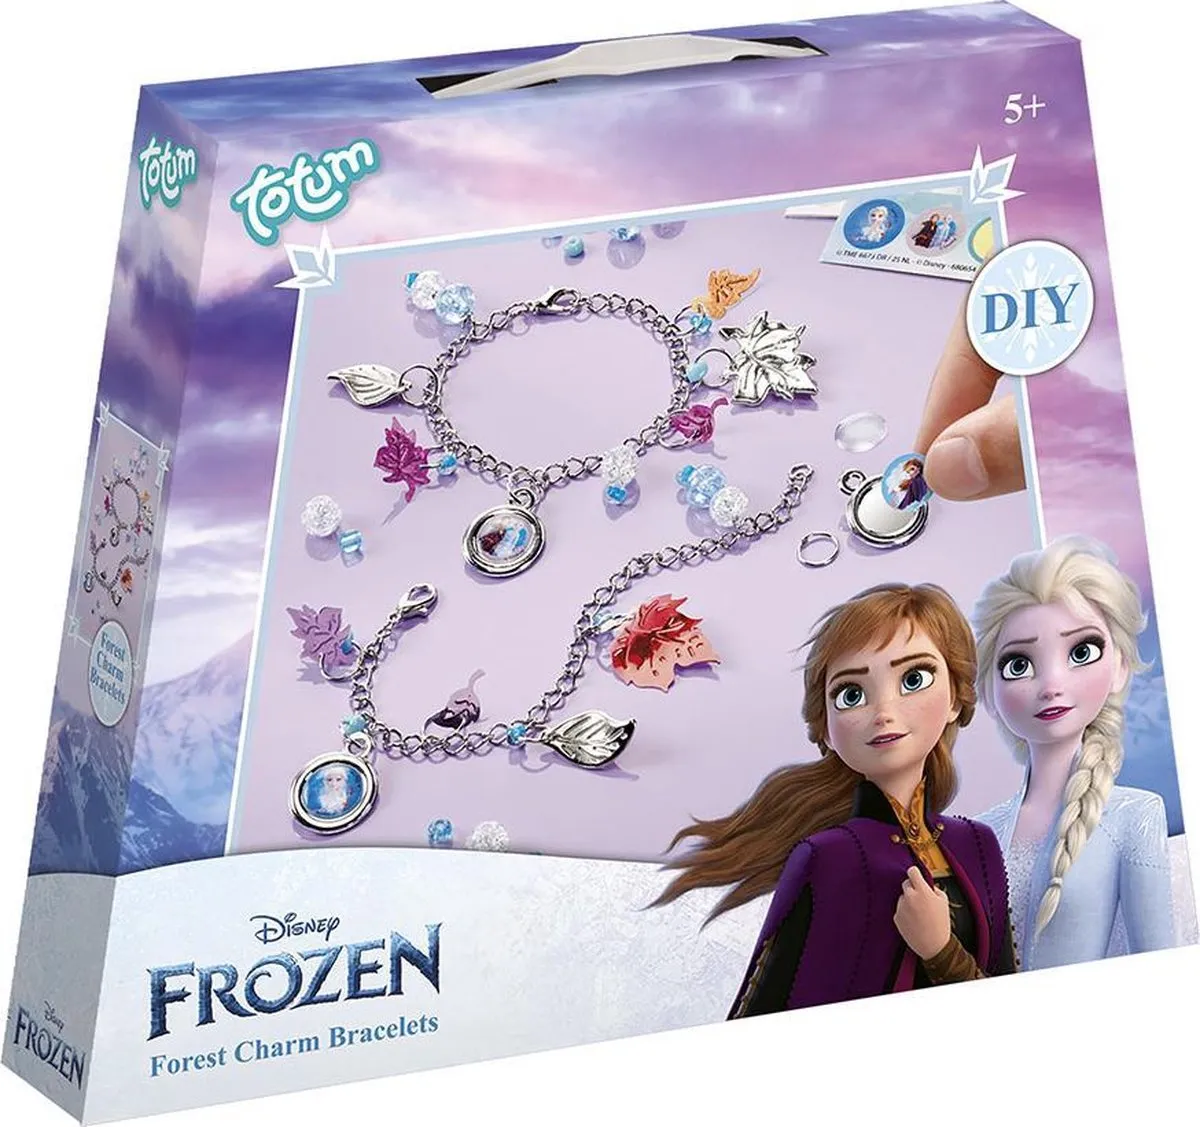 Disney Frozen 2 Forest Charm Bracelets - Bedelarmbandjes maken speelgoed